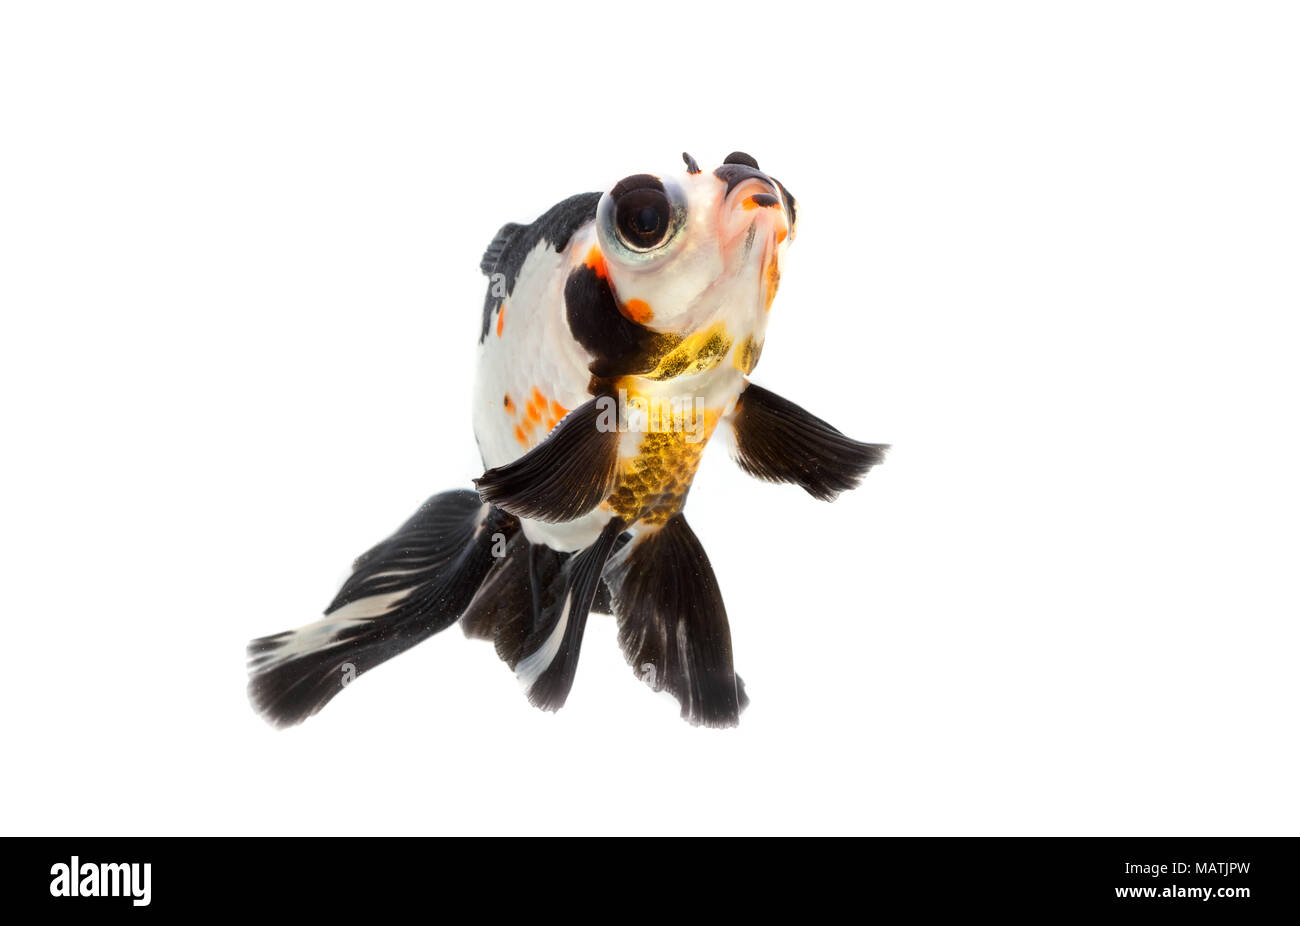 Fancy goldfish isolare su sfondo bianco Foto Stock